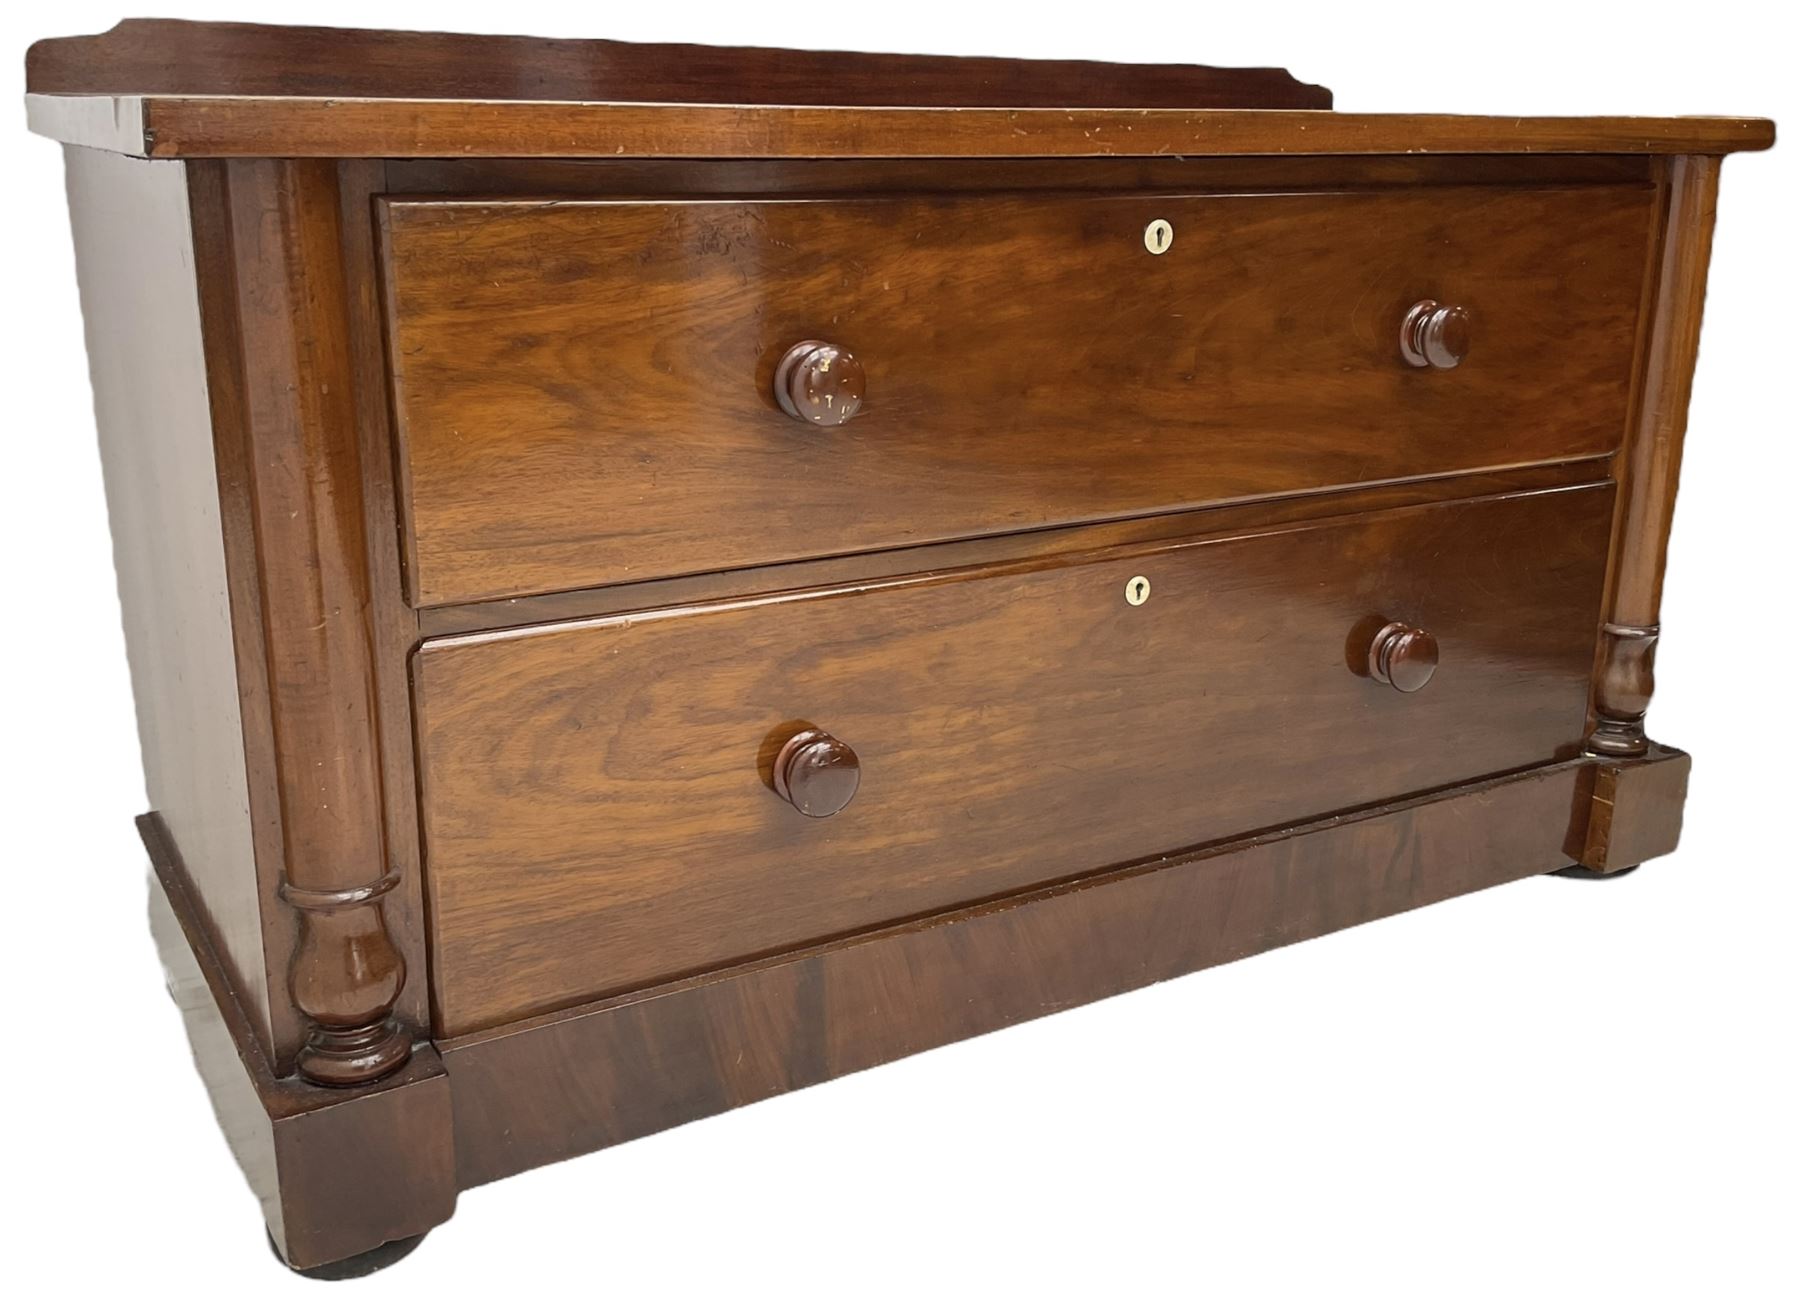 Victorian mahogany chest - Image 4 of 8